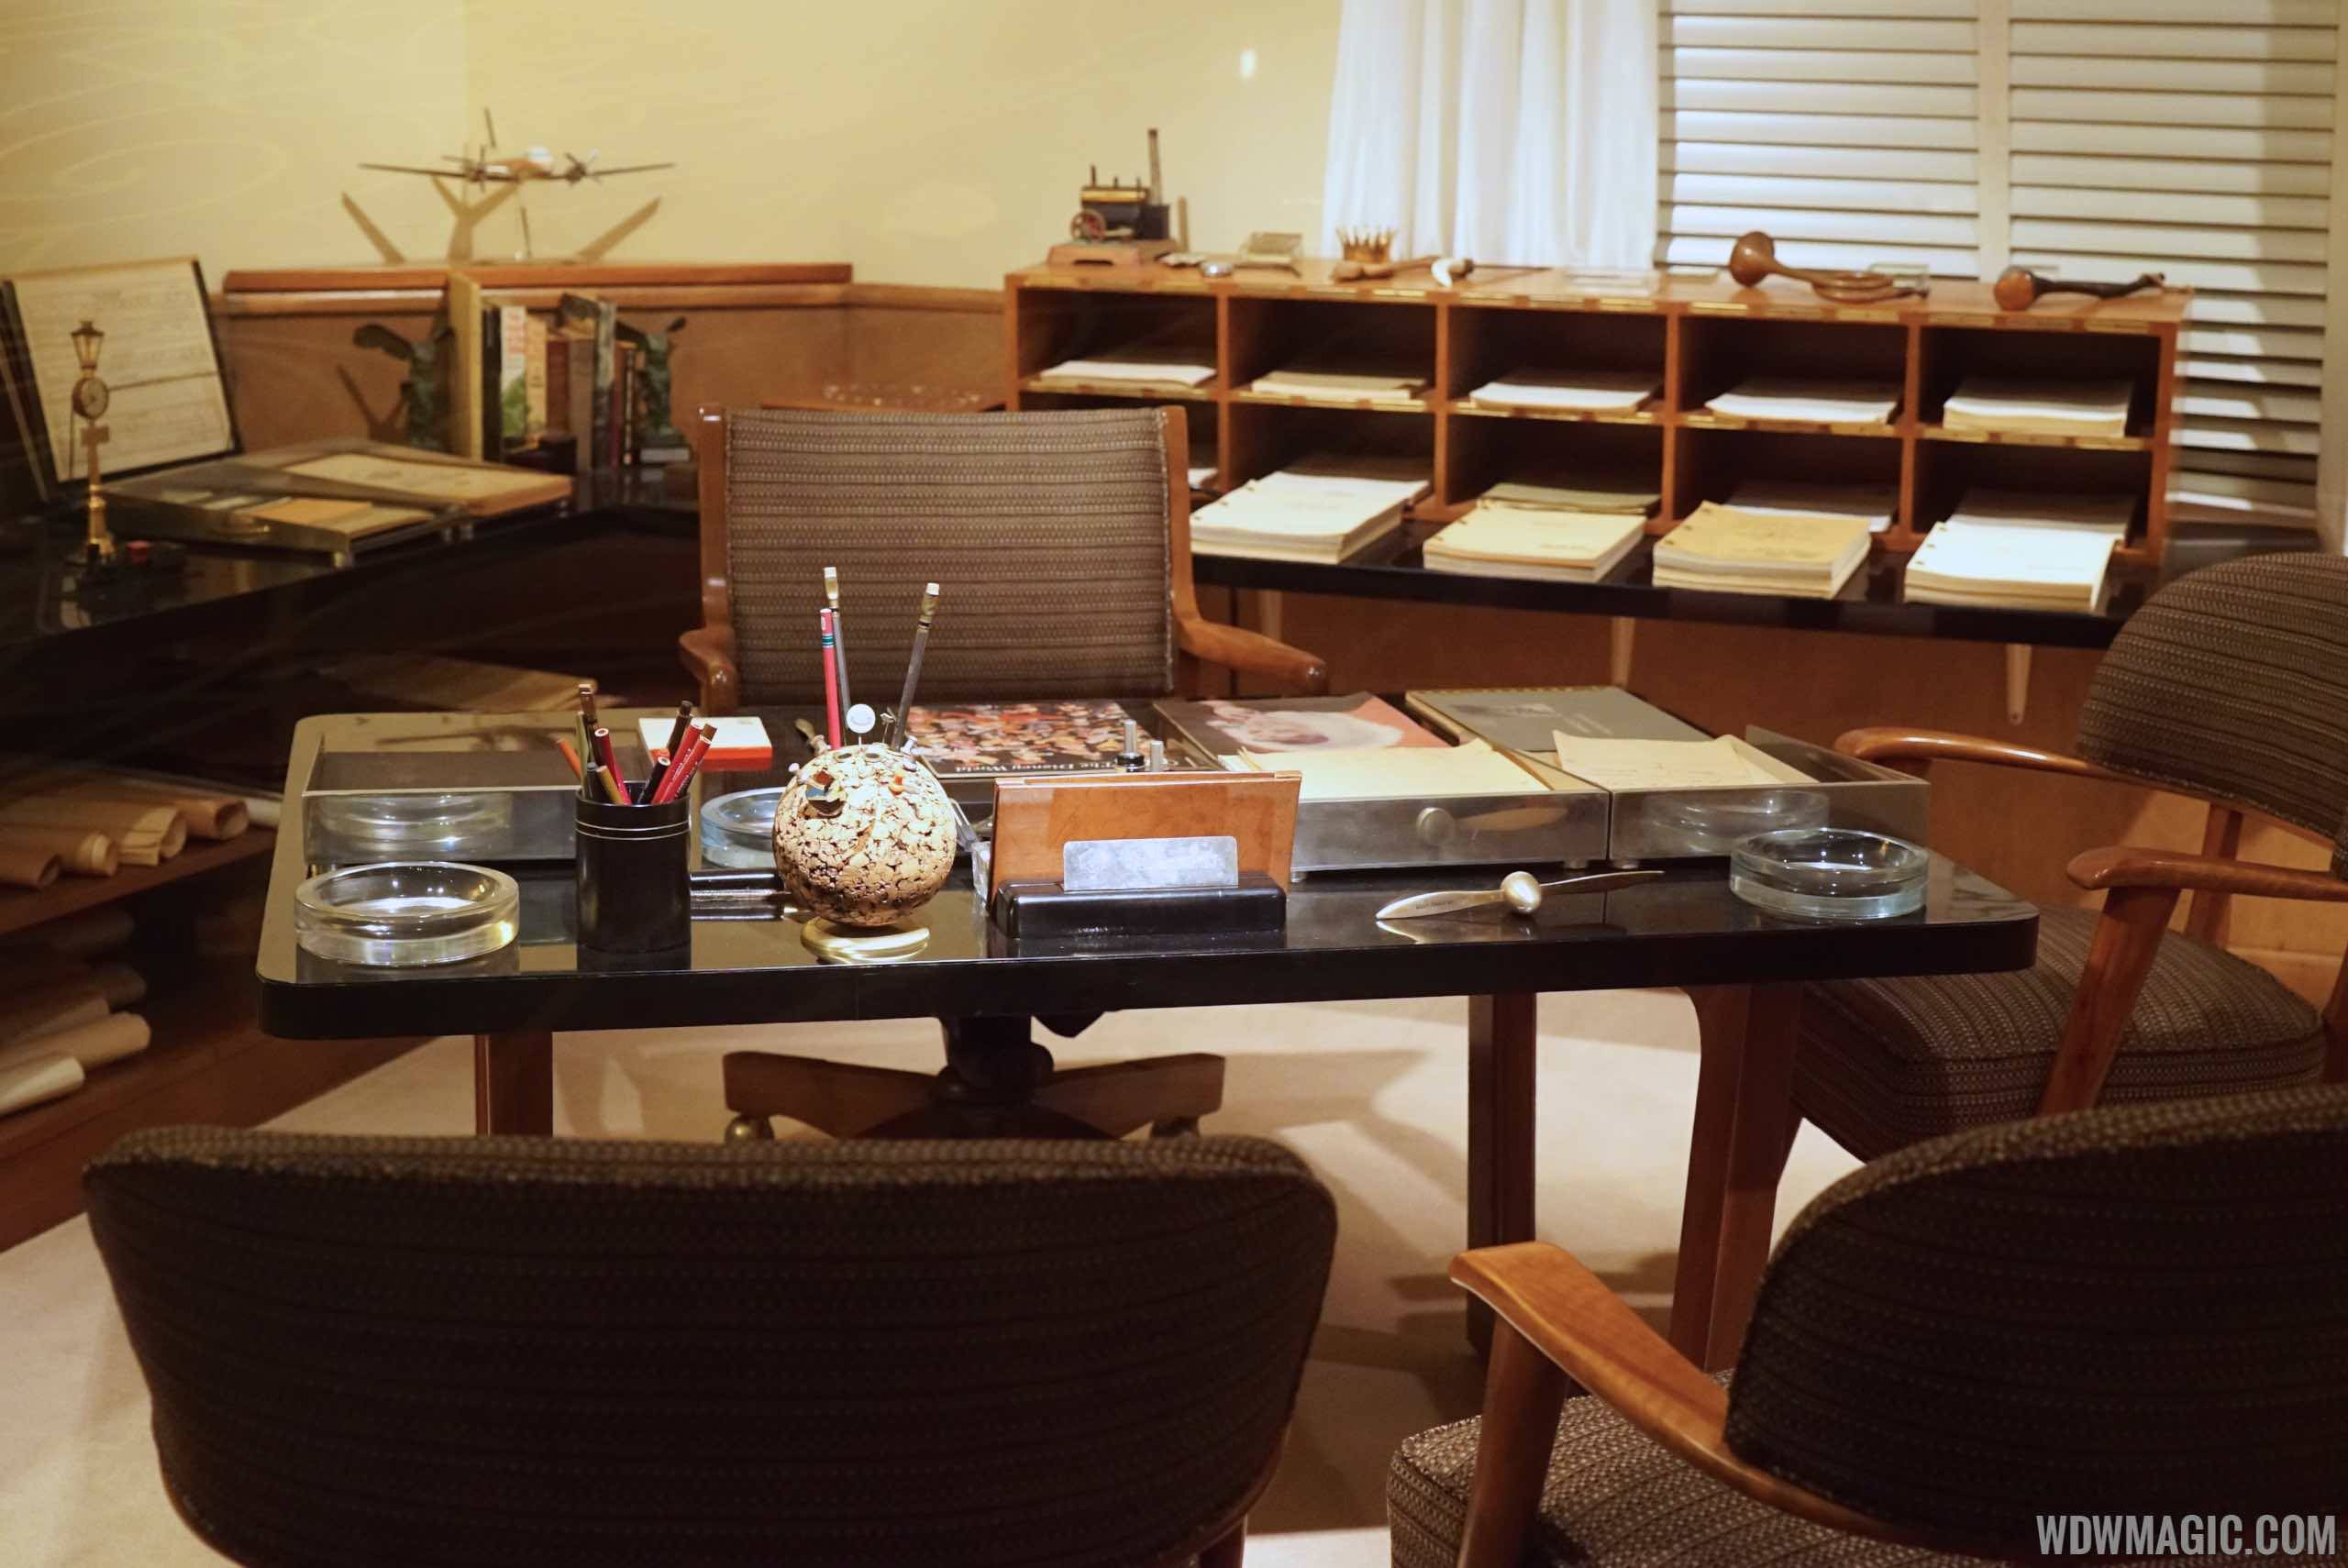 One Man's Dream - Walt Disney's desk